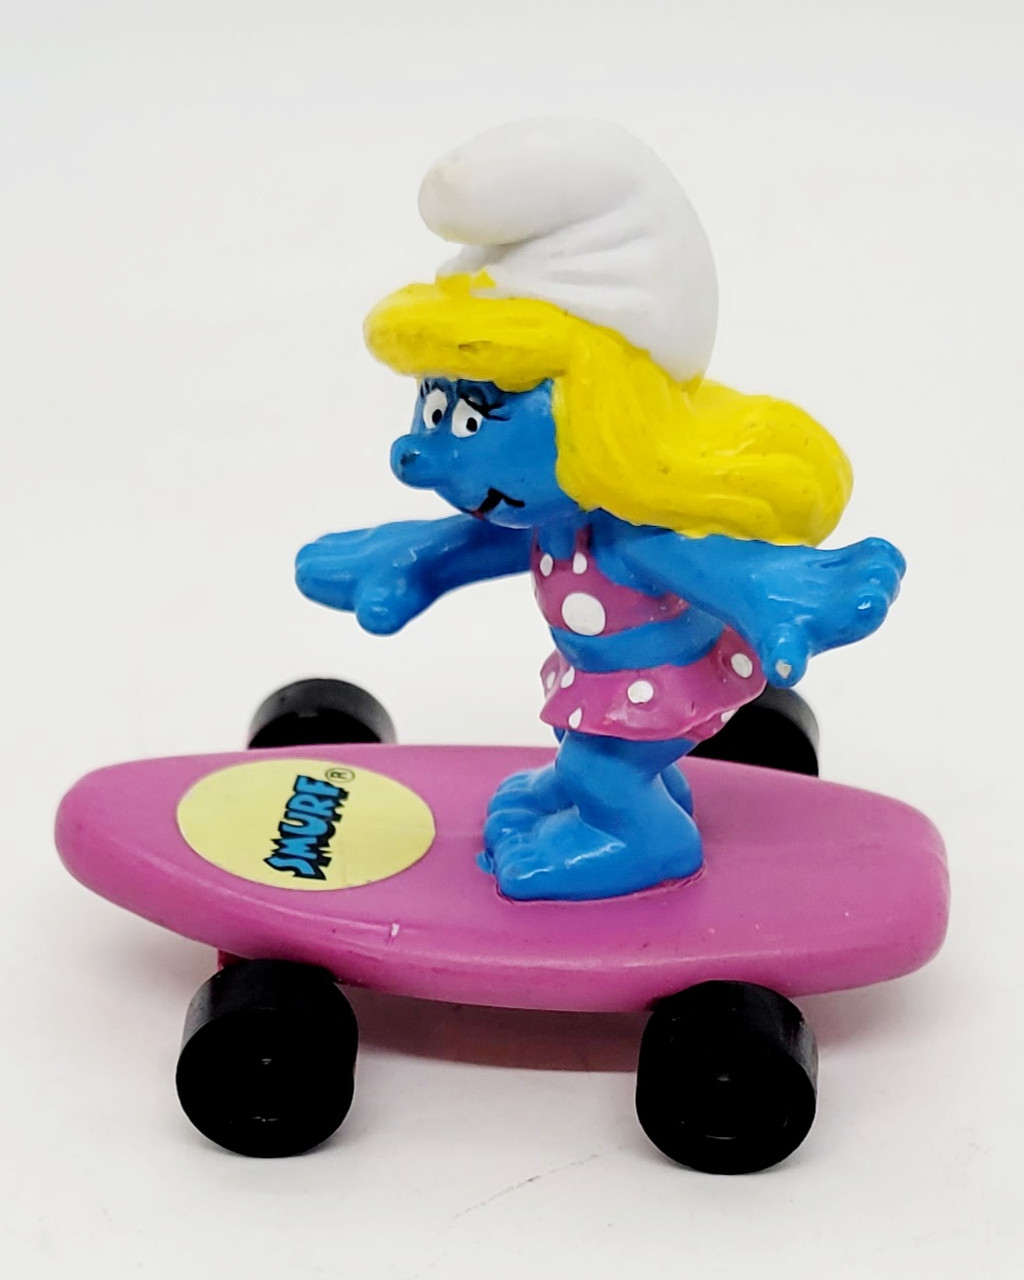 Hardees Kids Meal Toy 1990 Smurfs - Smurfette on Purple Skateboard